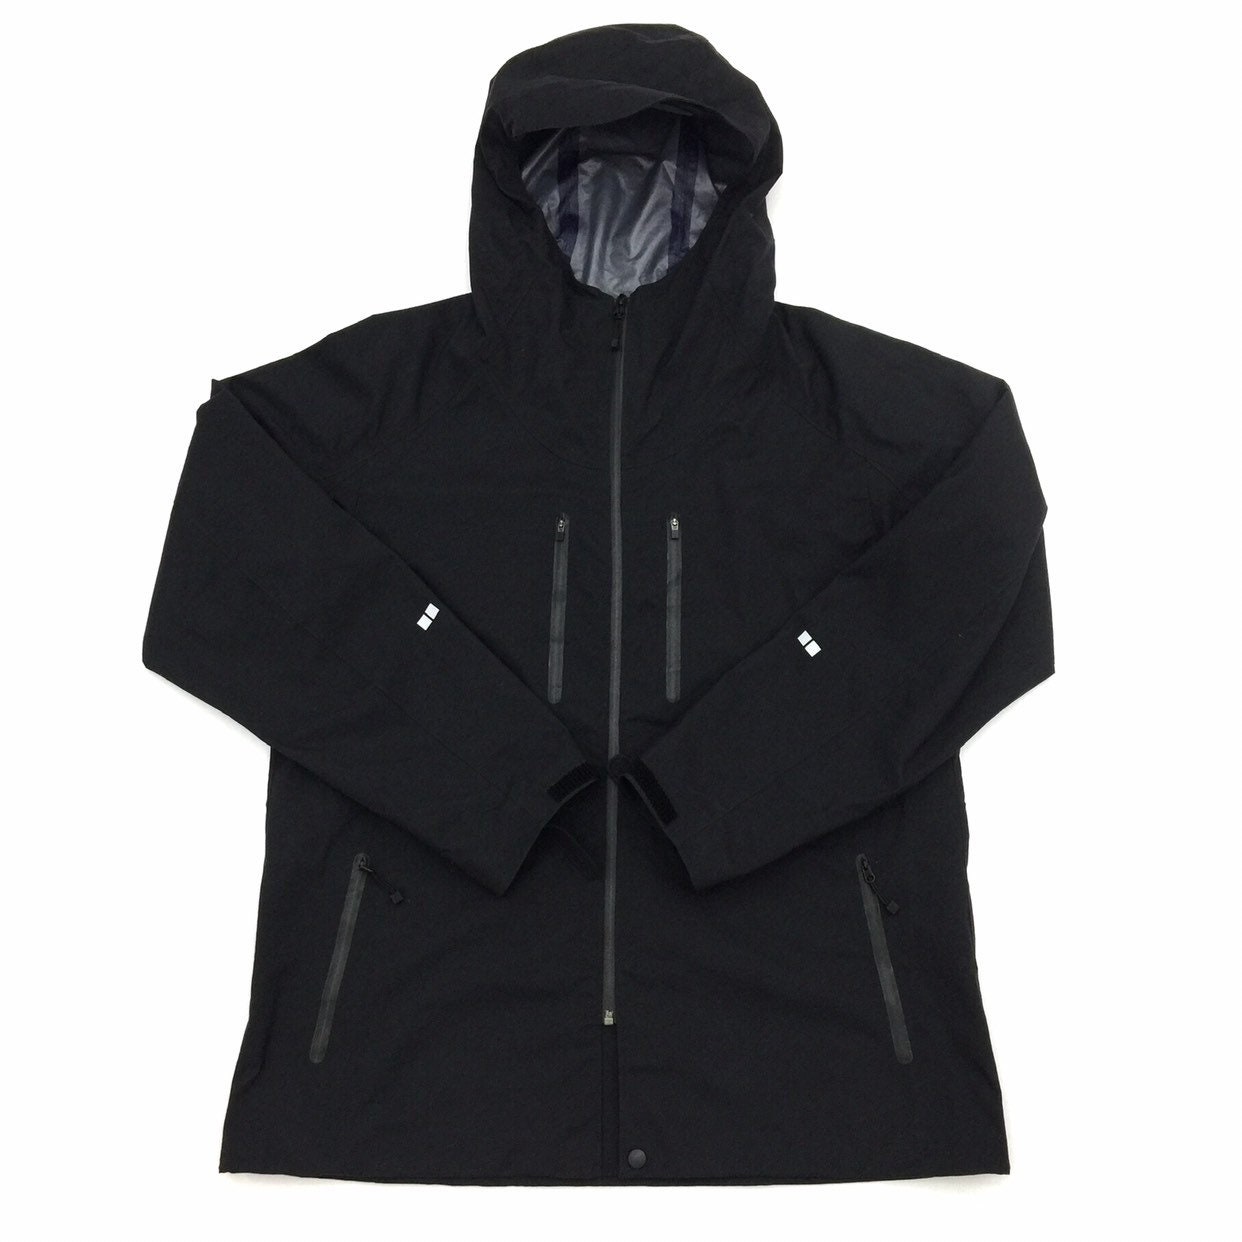 Uniqlo Raincoat Uniqlo Full Zip Black Plain Solid Raincoat | Etsy